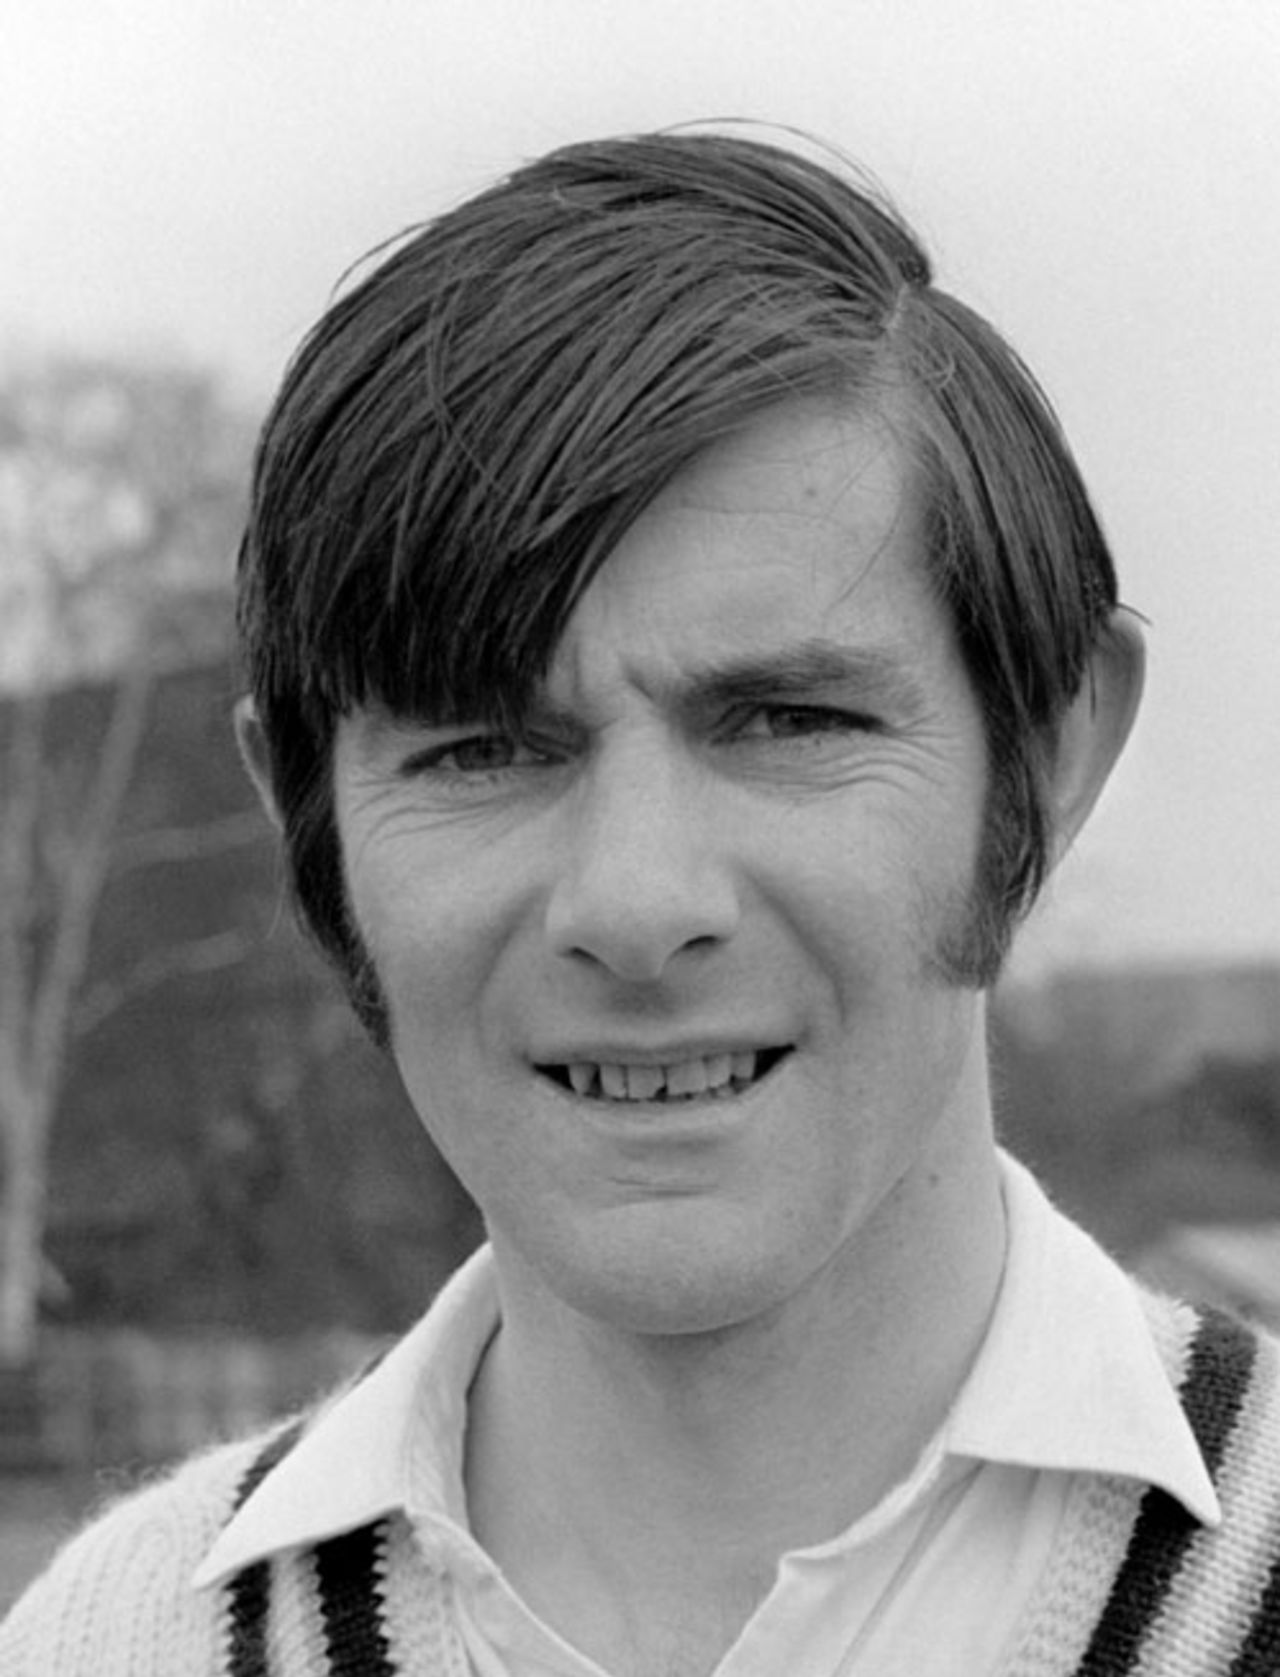 Norman McVicker in 1971